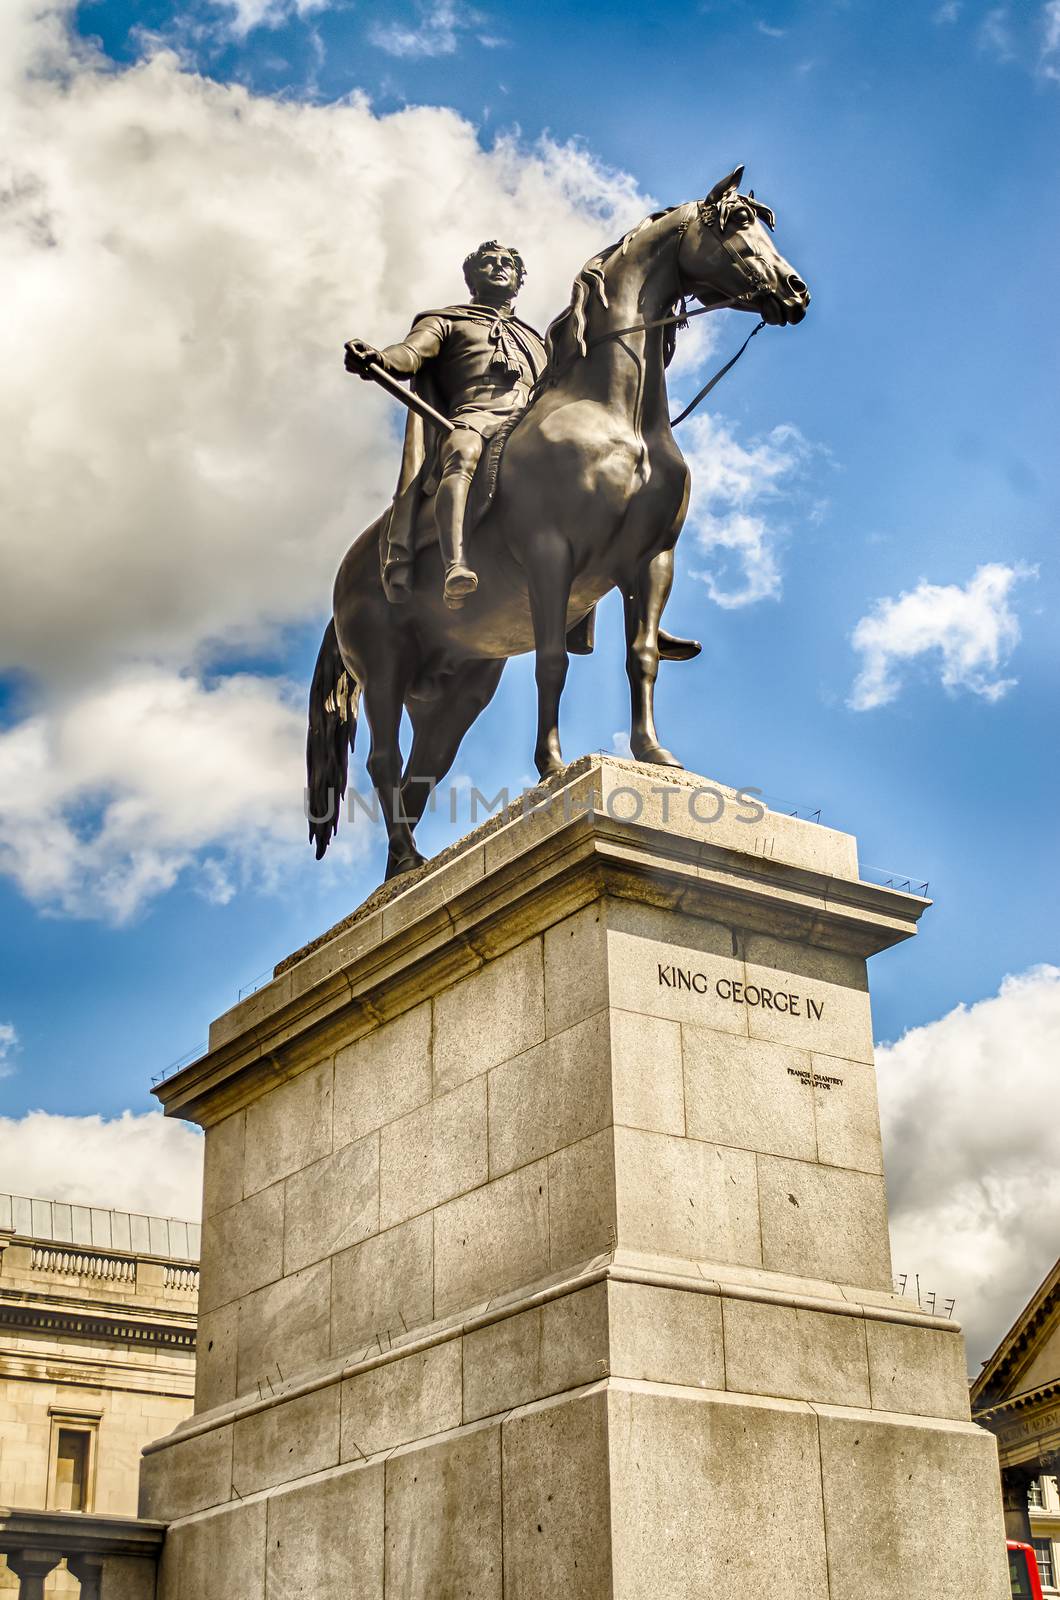 King George IV Monument in Trafalgar Square, London by marcorubino